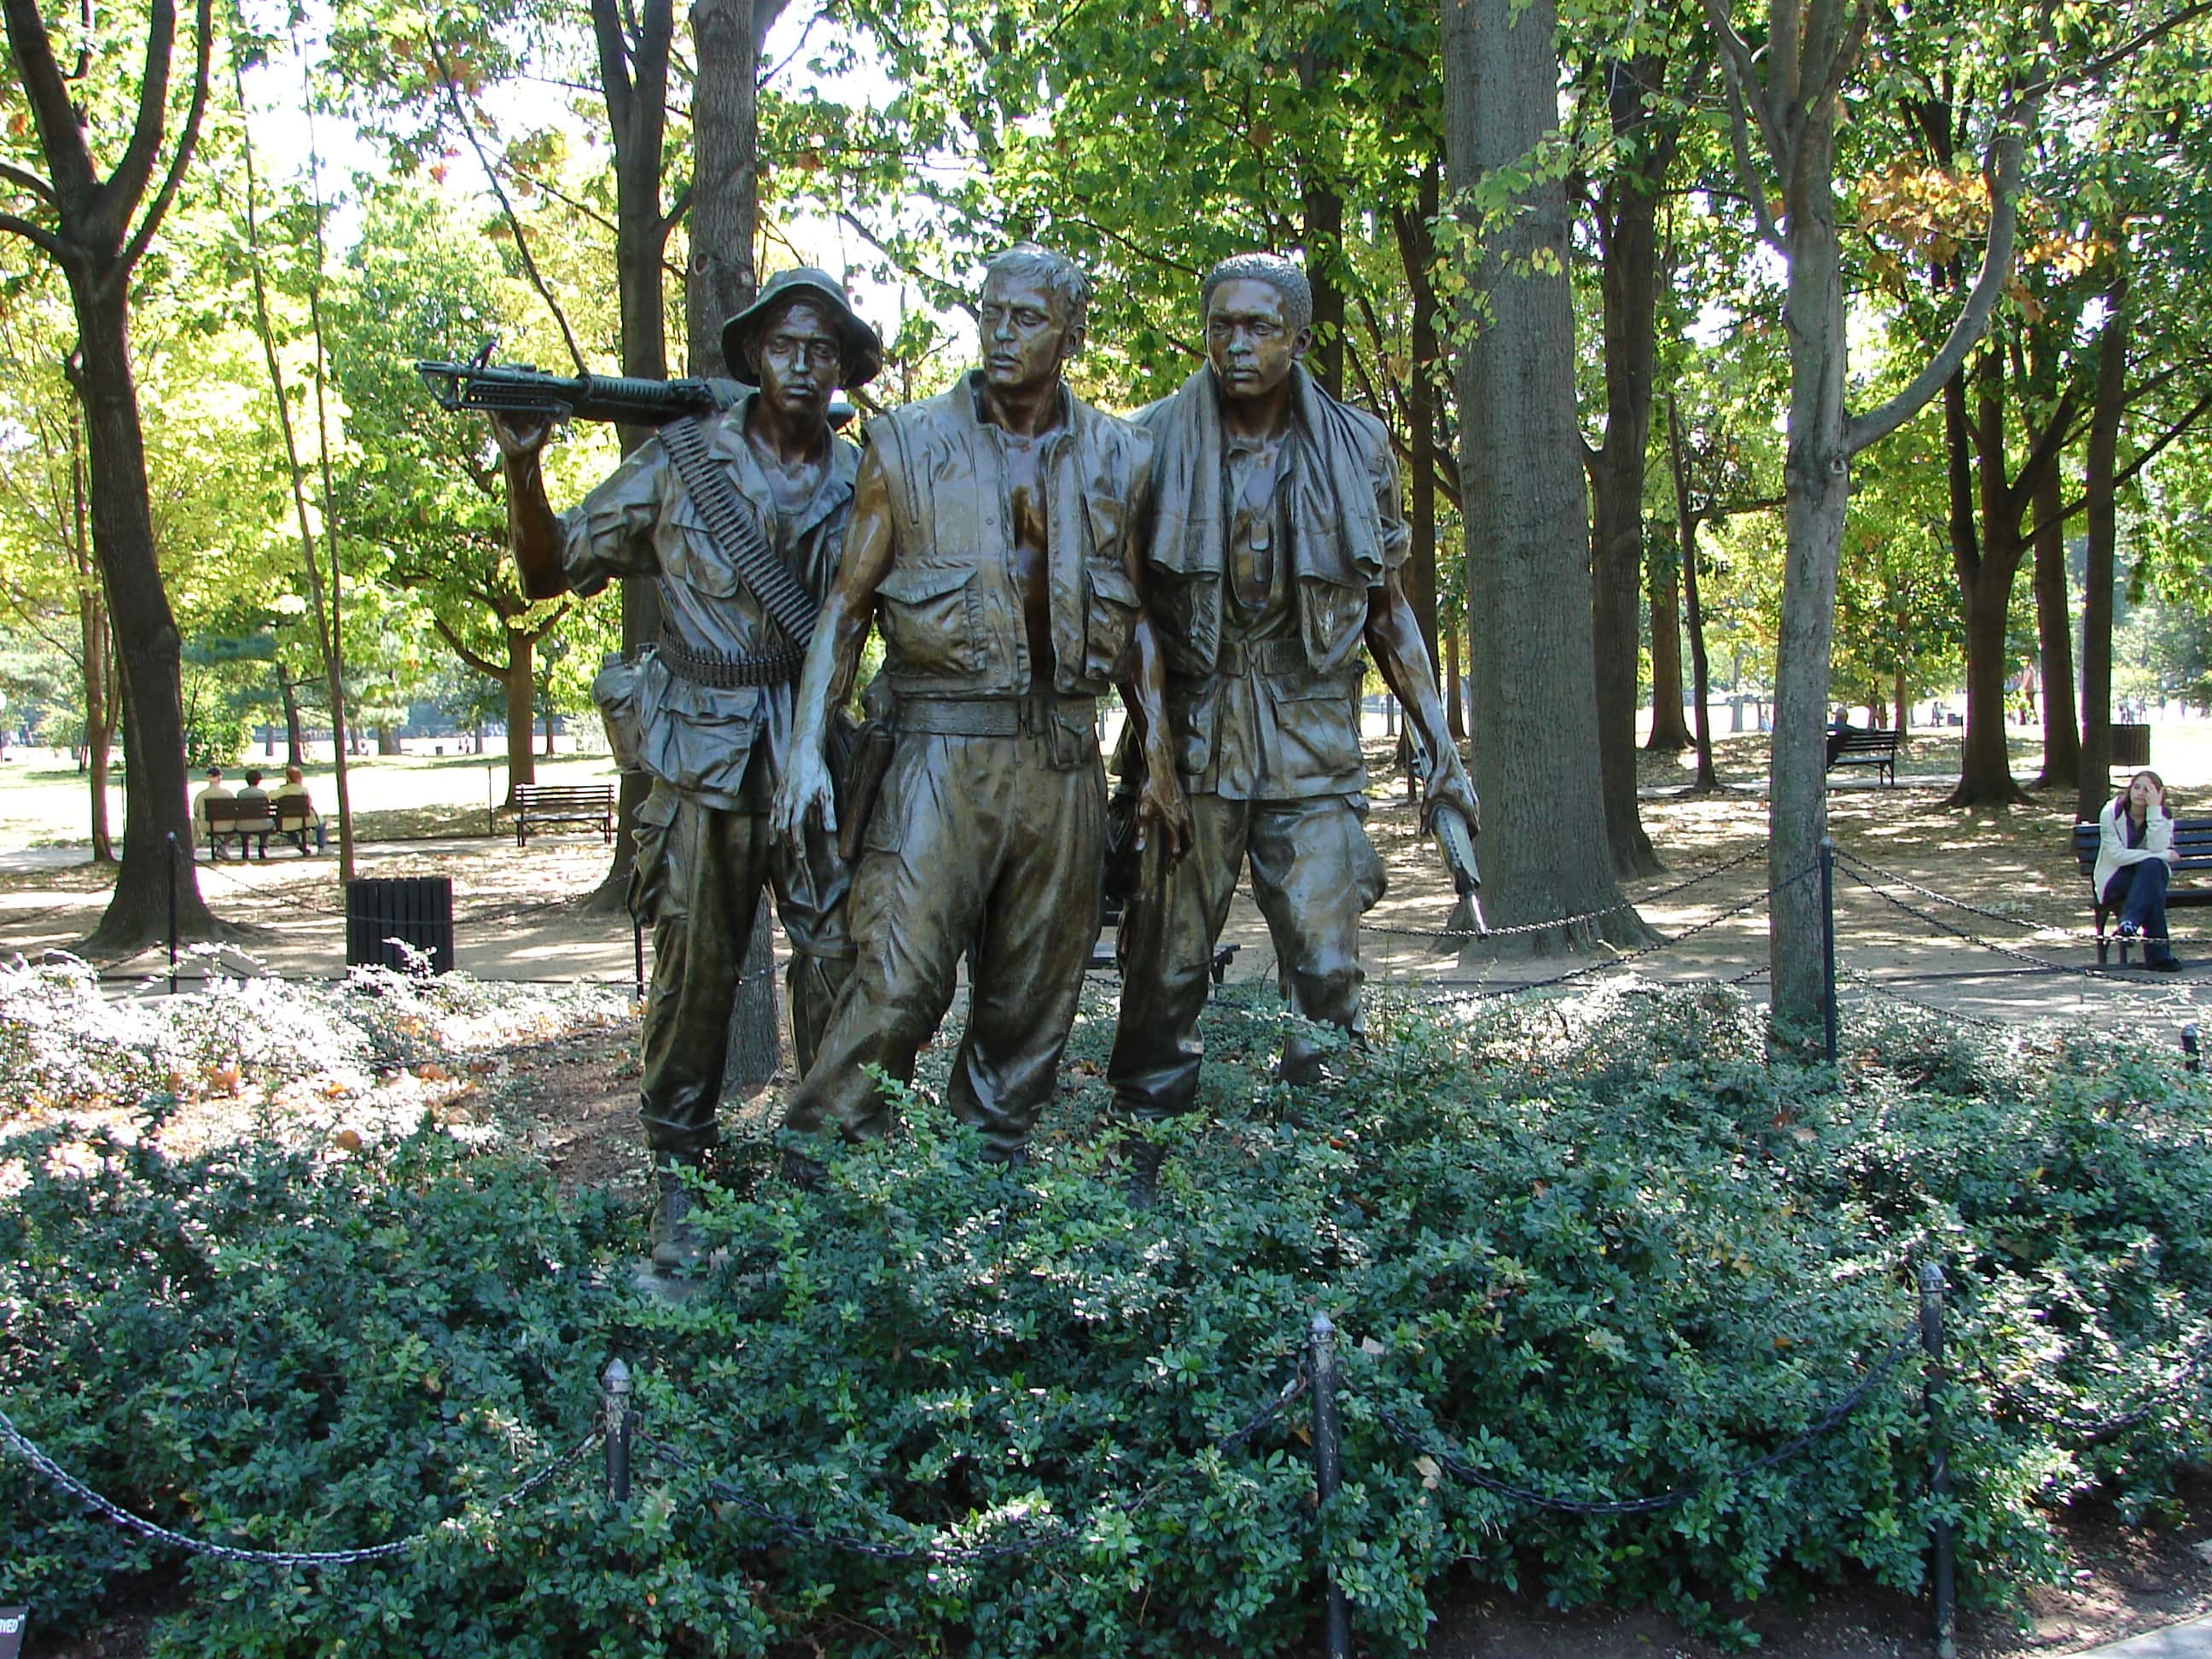 Statue outside the Vietnam War Memorial in Washington DC